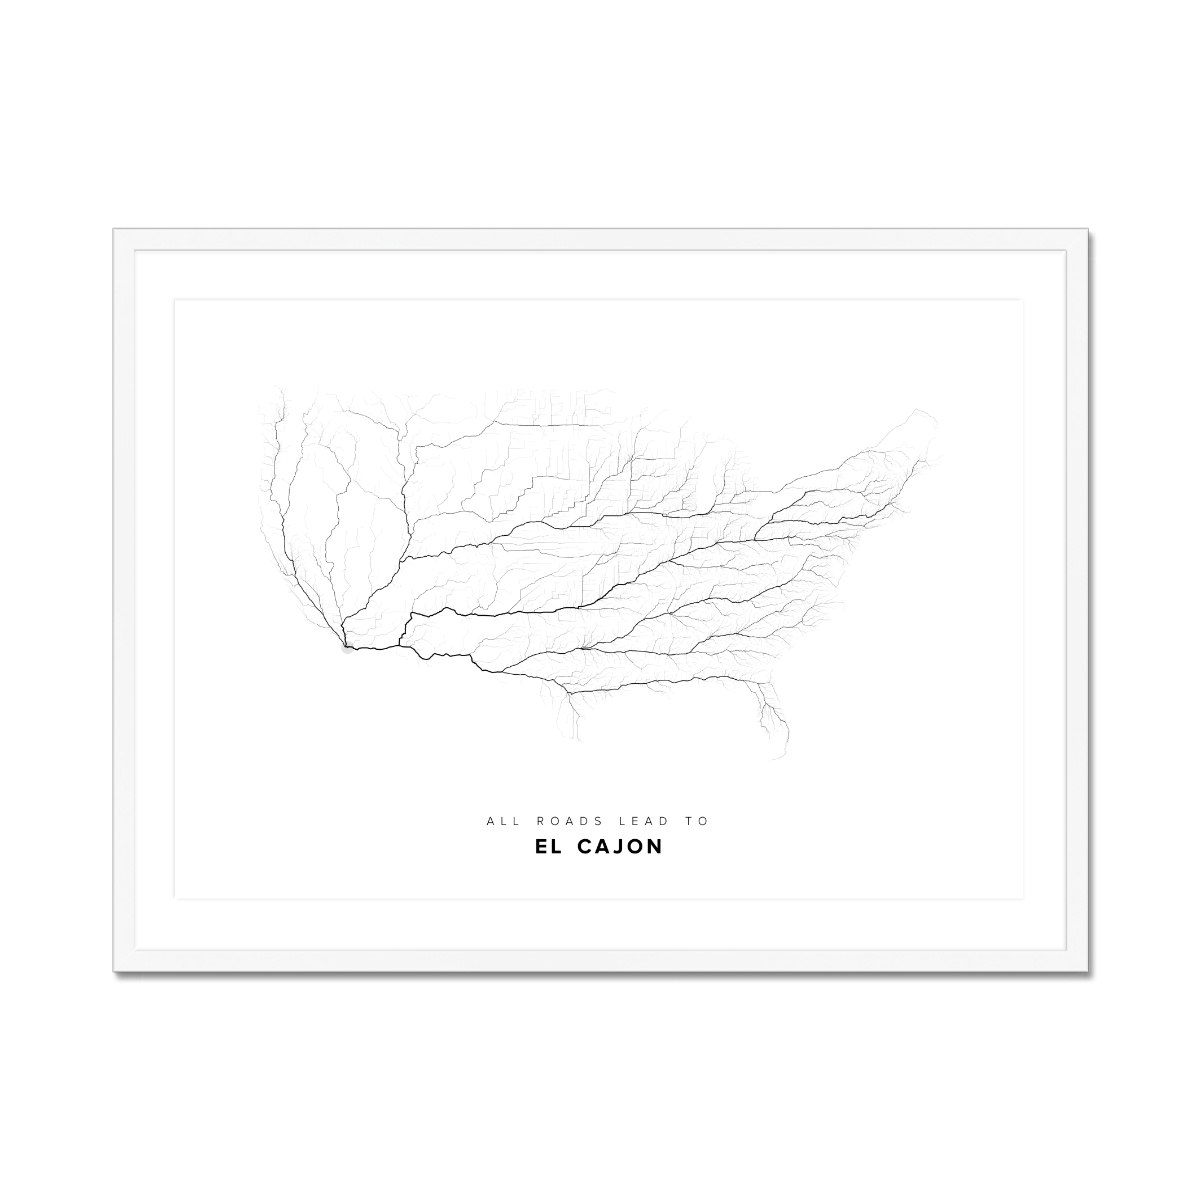 All roads lead to El Cajon (United States of America) Fine Art Map Print